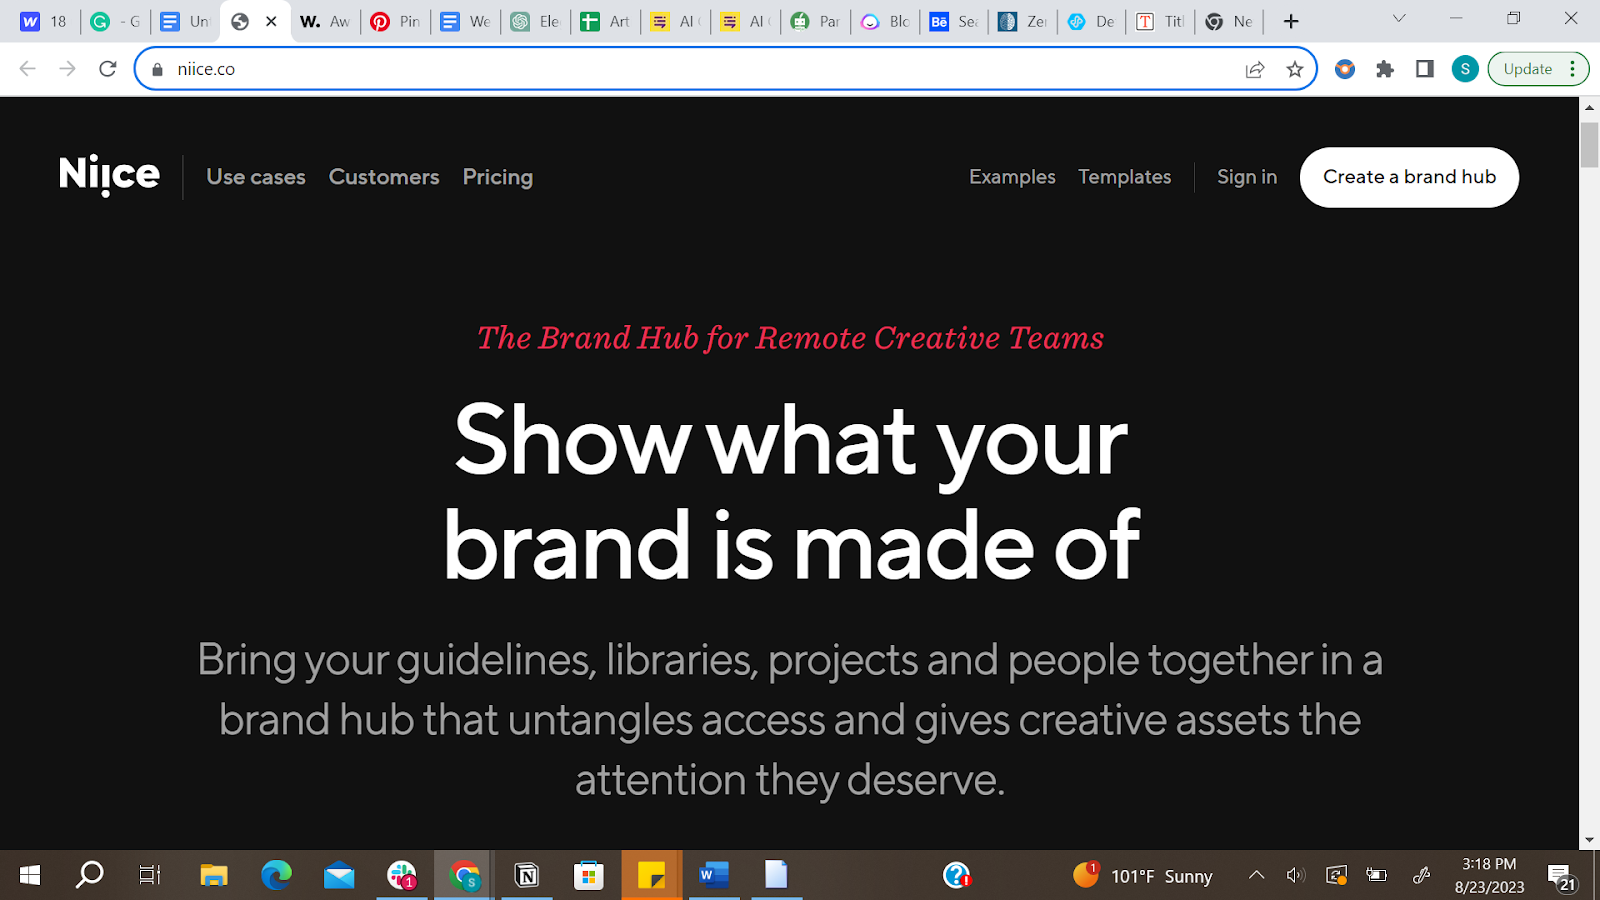 Niice's website design, featuring black background